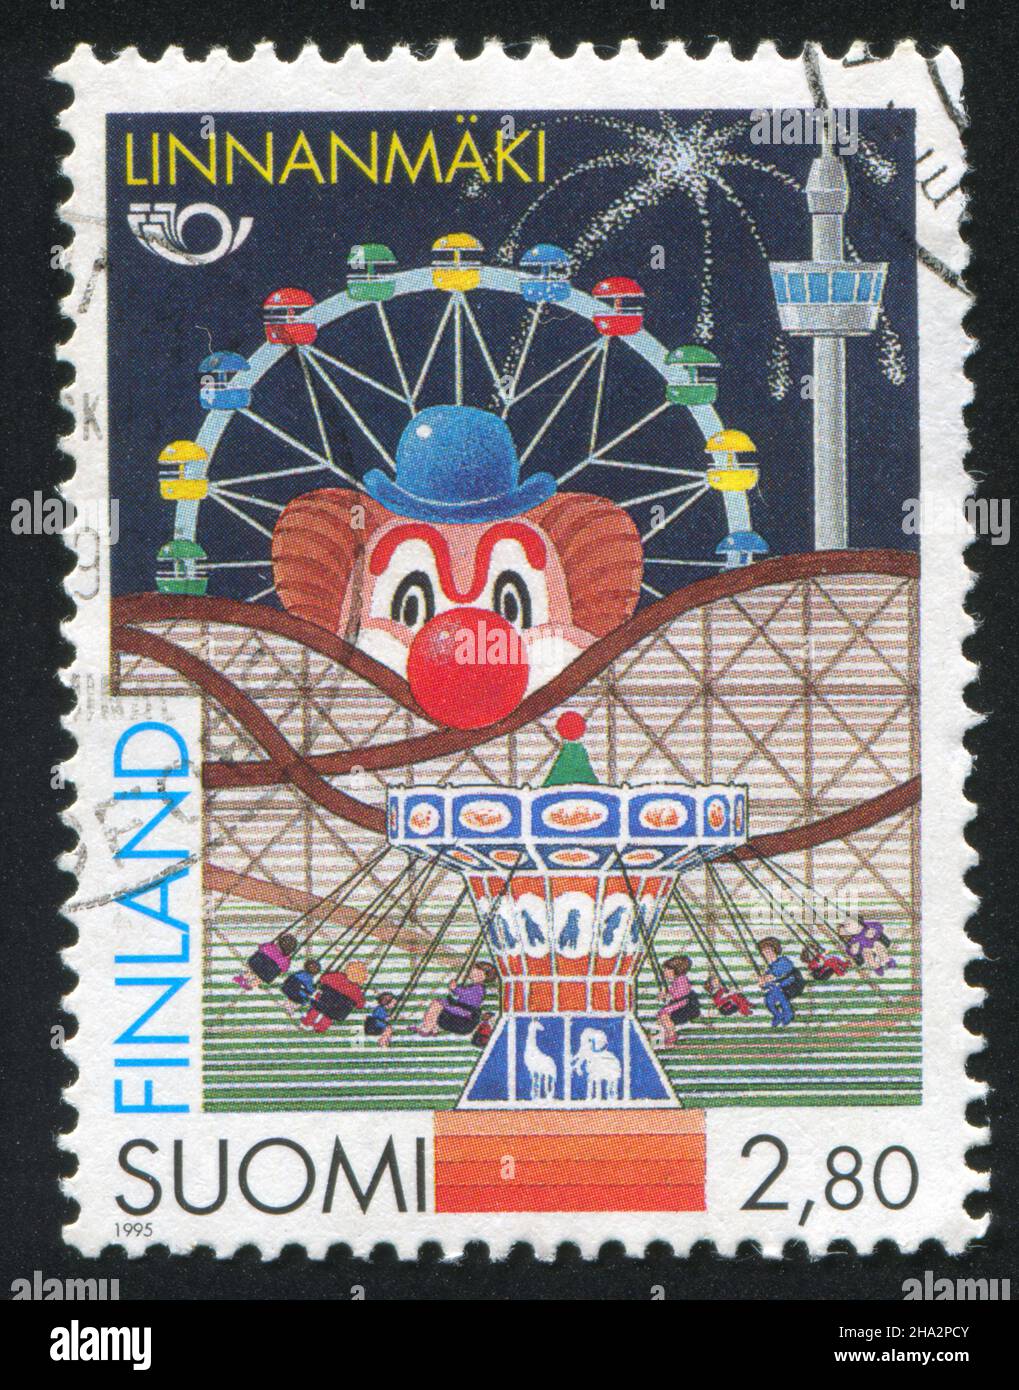 FINLAND - CIRCA 1995: stamp printed by Finland, shows Linnanmaki amusement park, Helsinki, circa 1995 Stock Photo